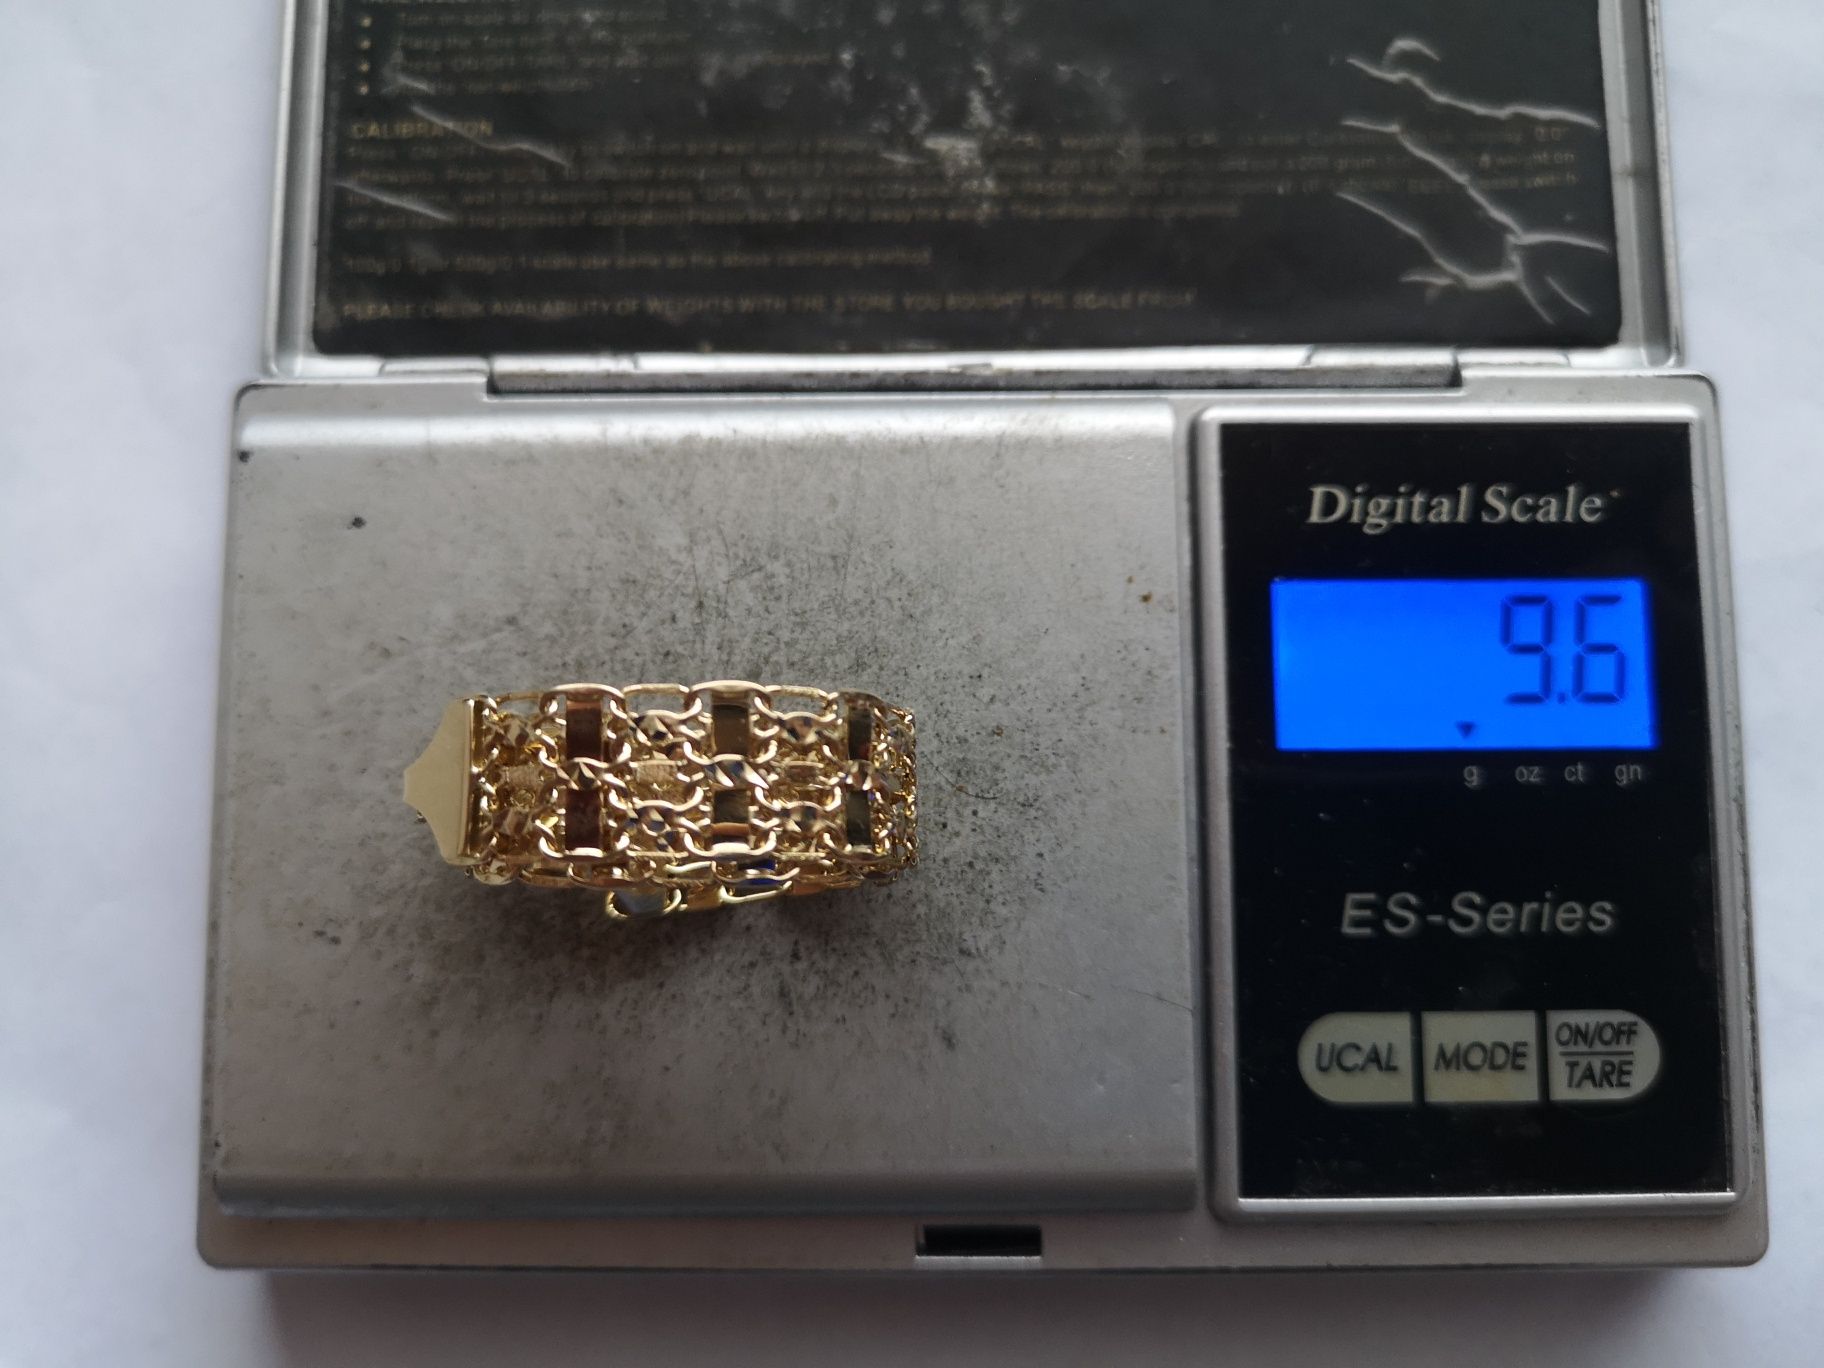 Damska bransoletka złota pr. 585